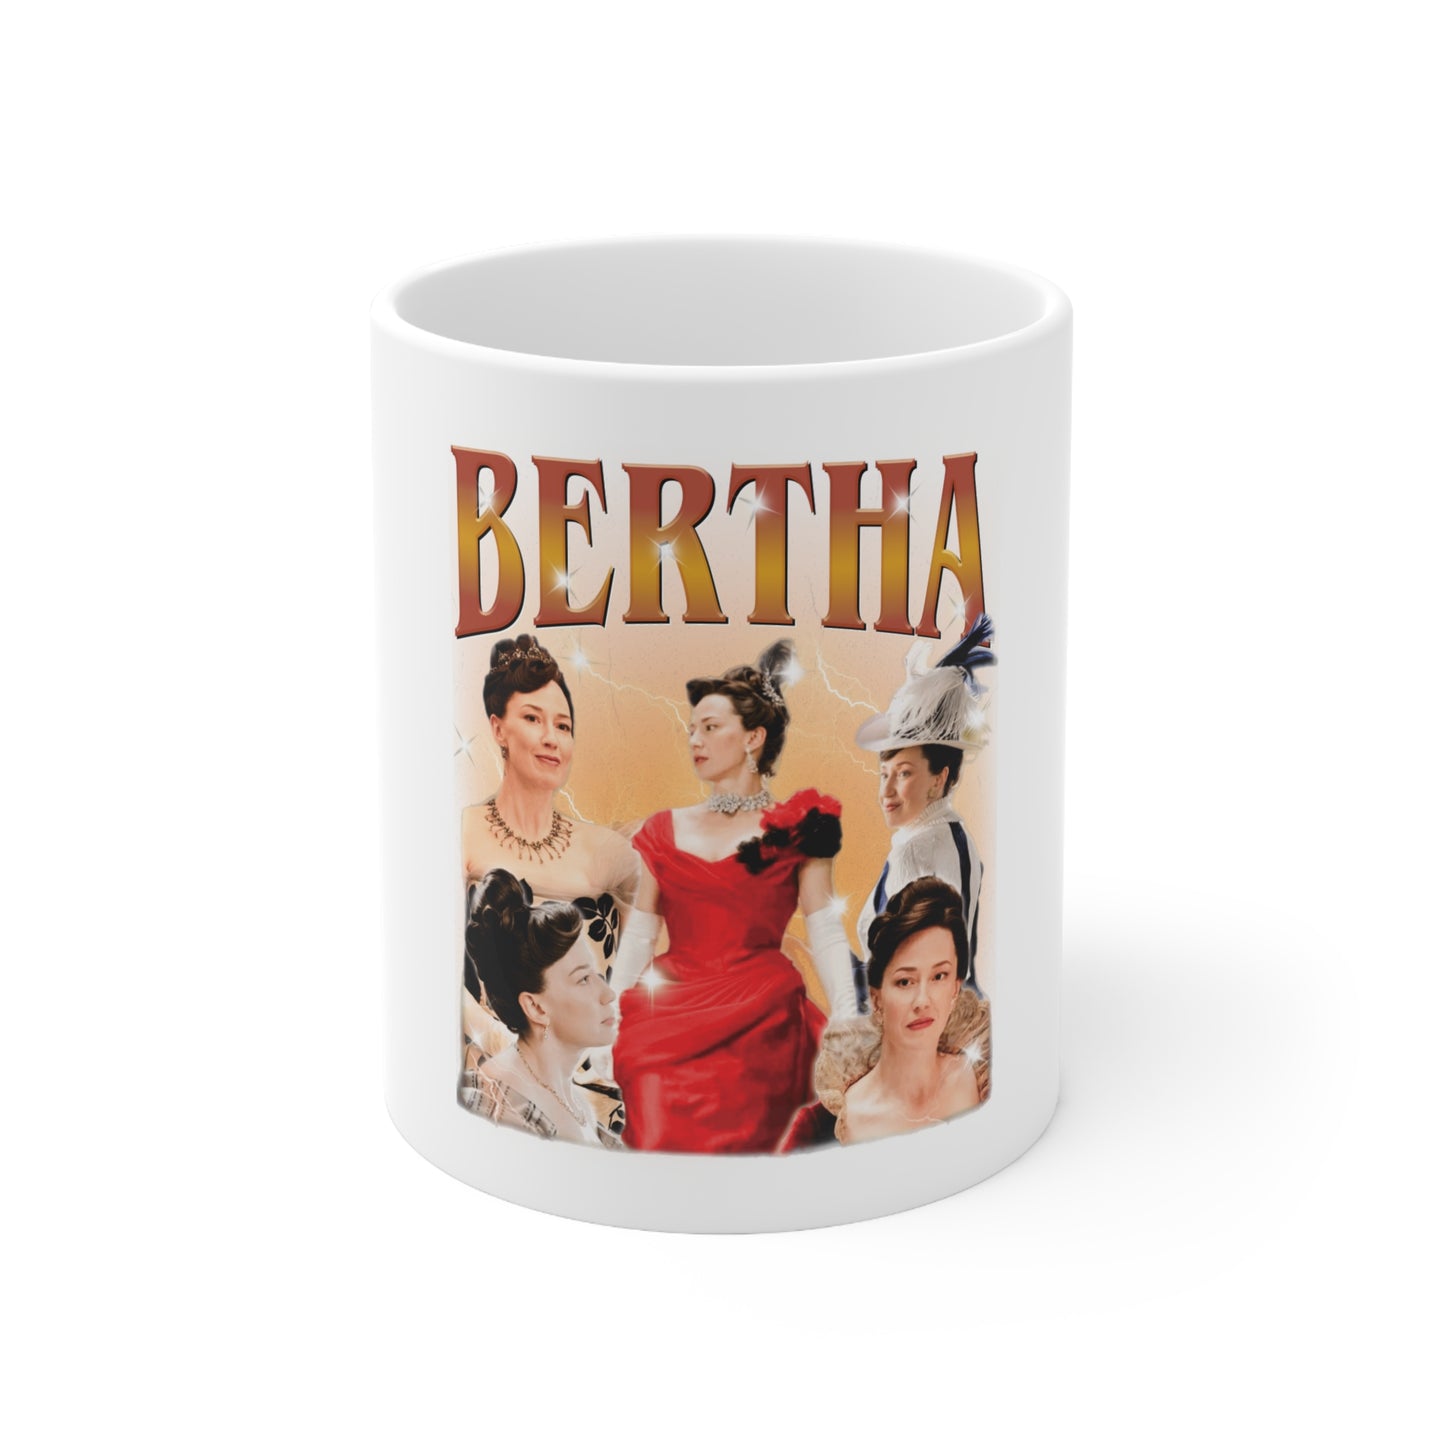 Breakfast with Bertha Mug